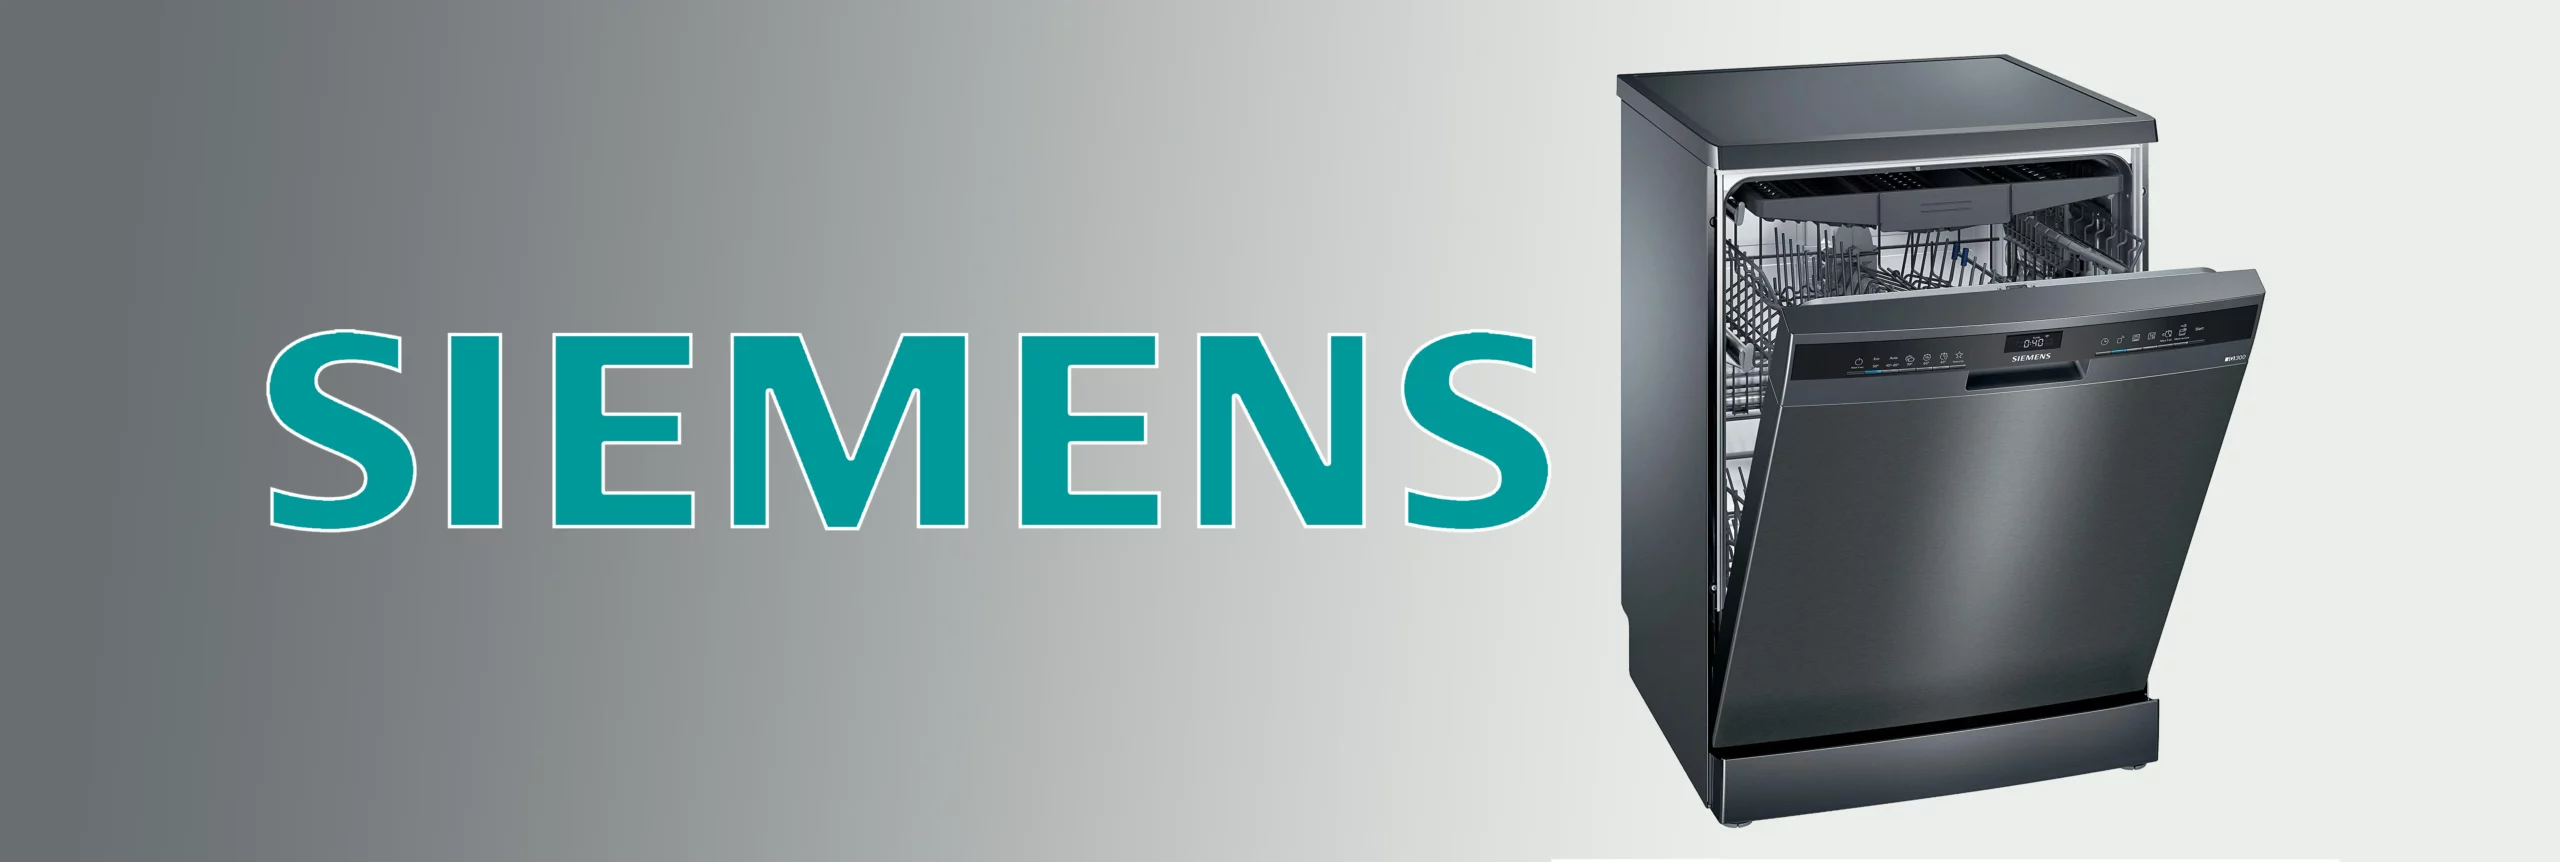 Lave-vaisselle Siemens